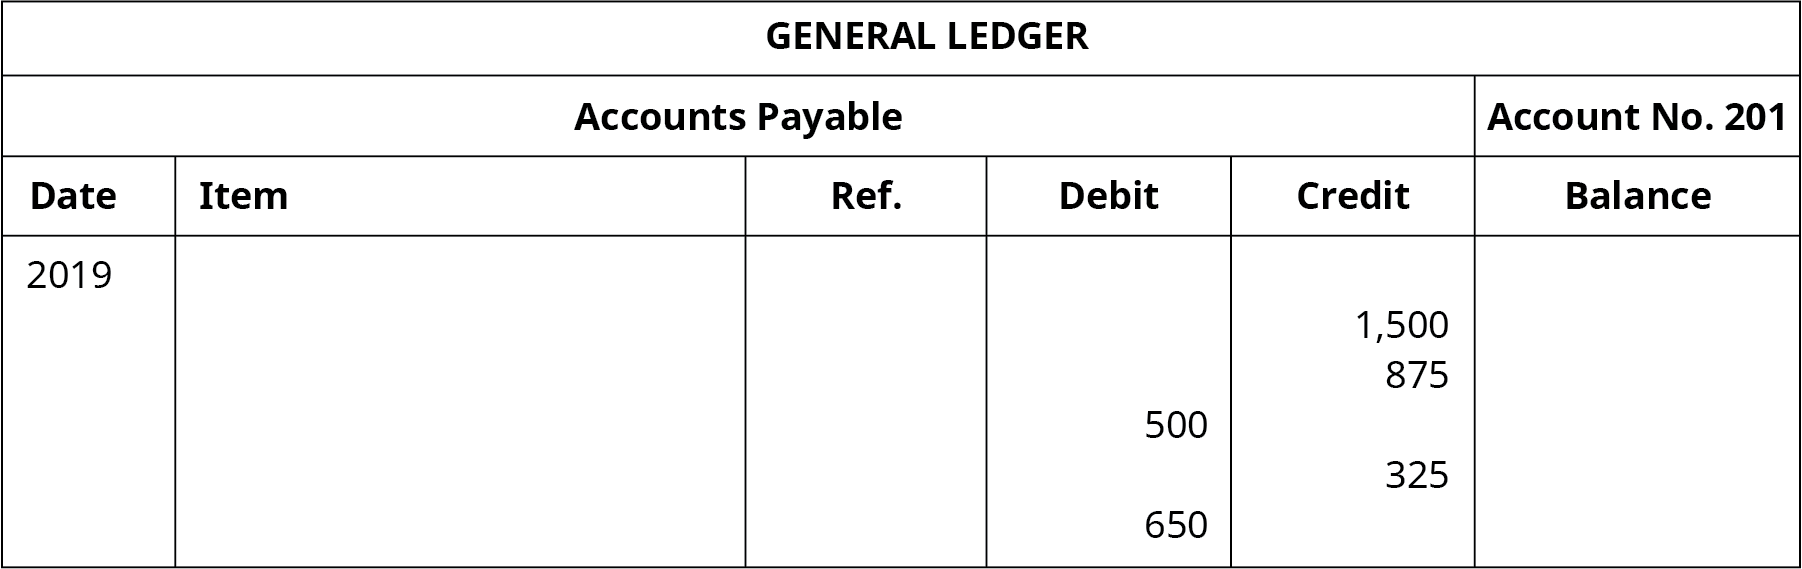 A General Ledger titled “Accounts Payable No. 201” with six columns. Date: 2019. Debit column entries: 500, 650. Credit column entries: 1,500, 875, 325.